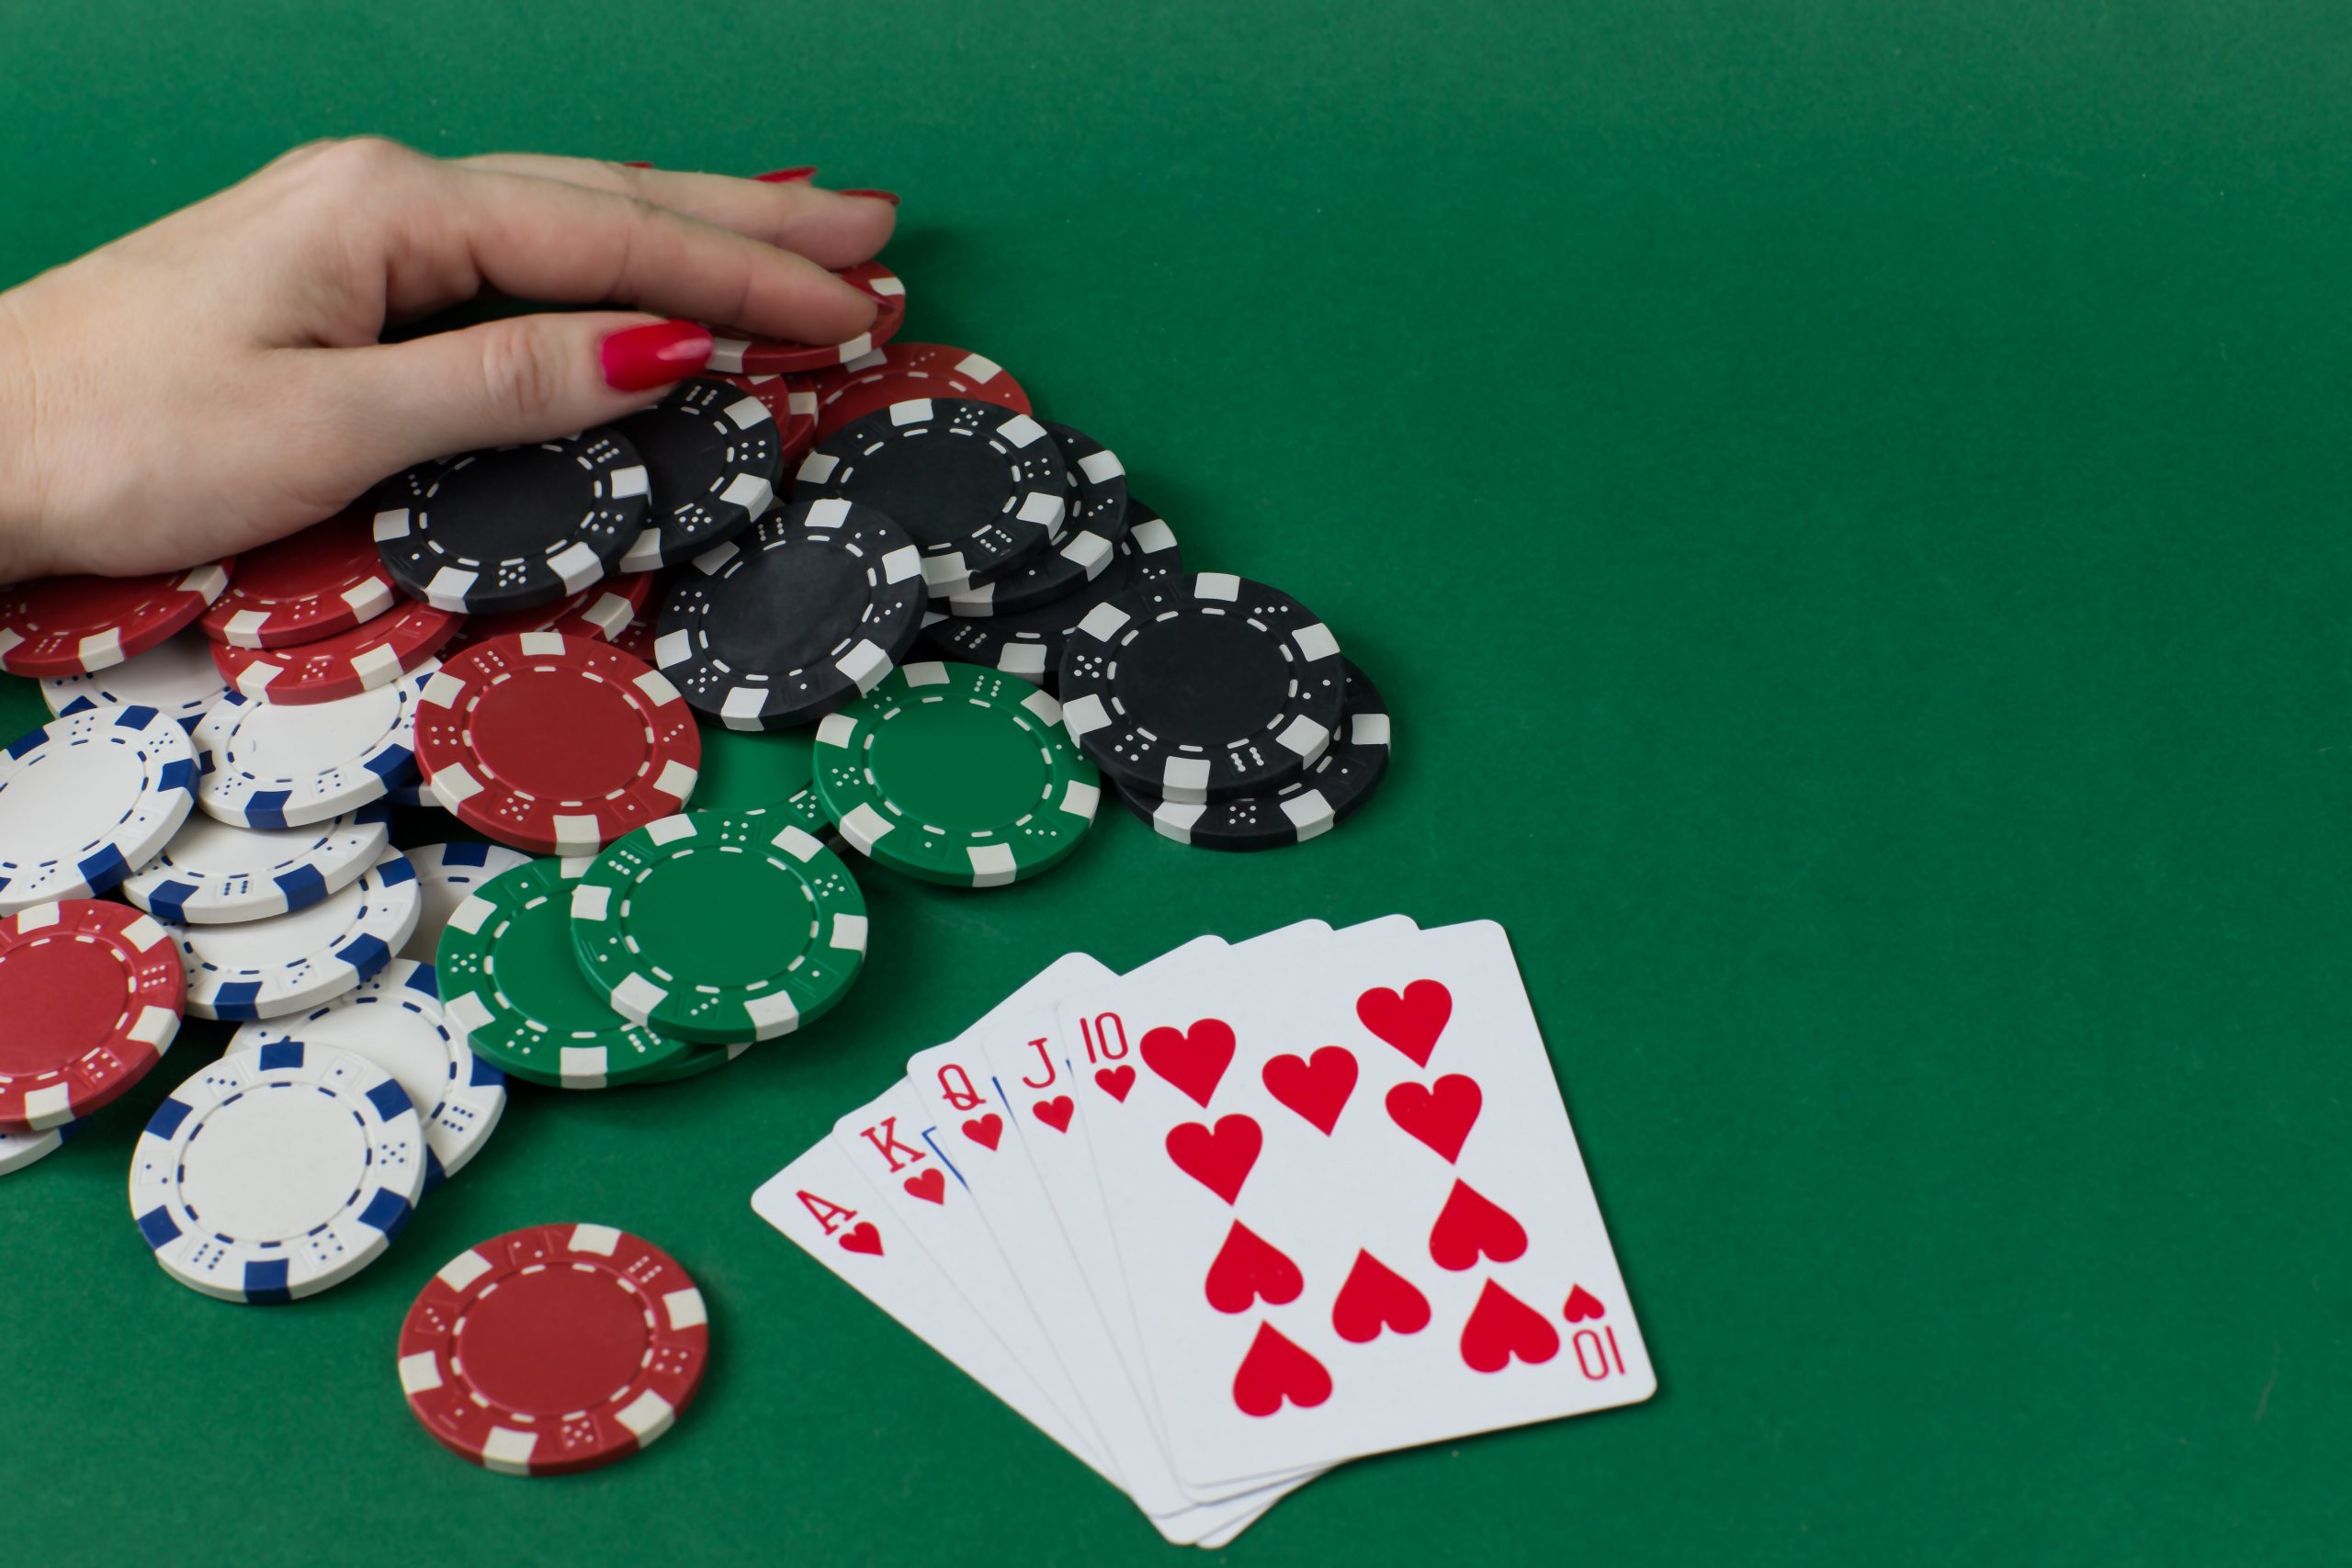 “Poker Omaha rules”